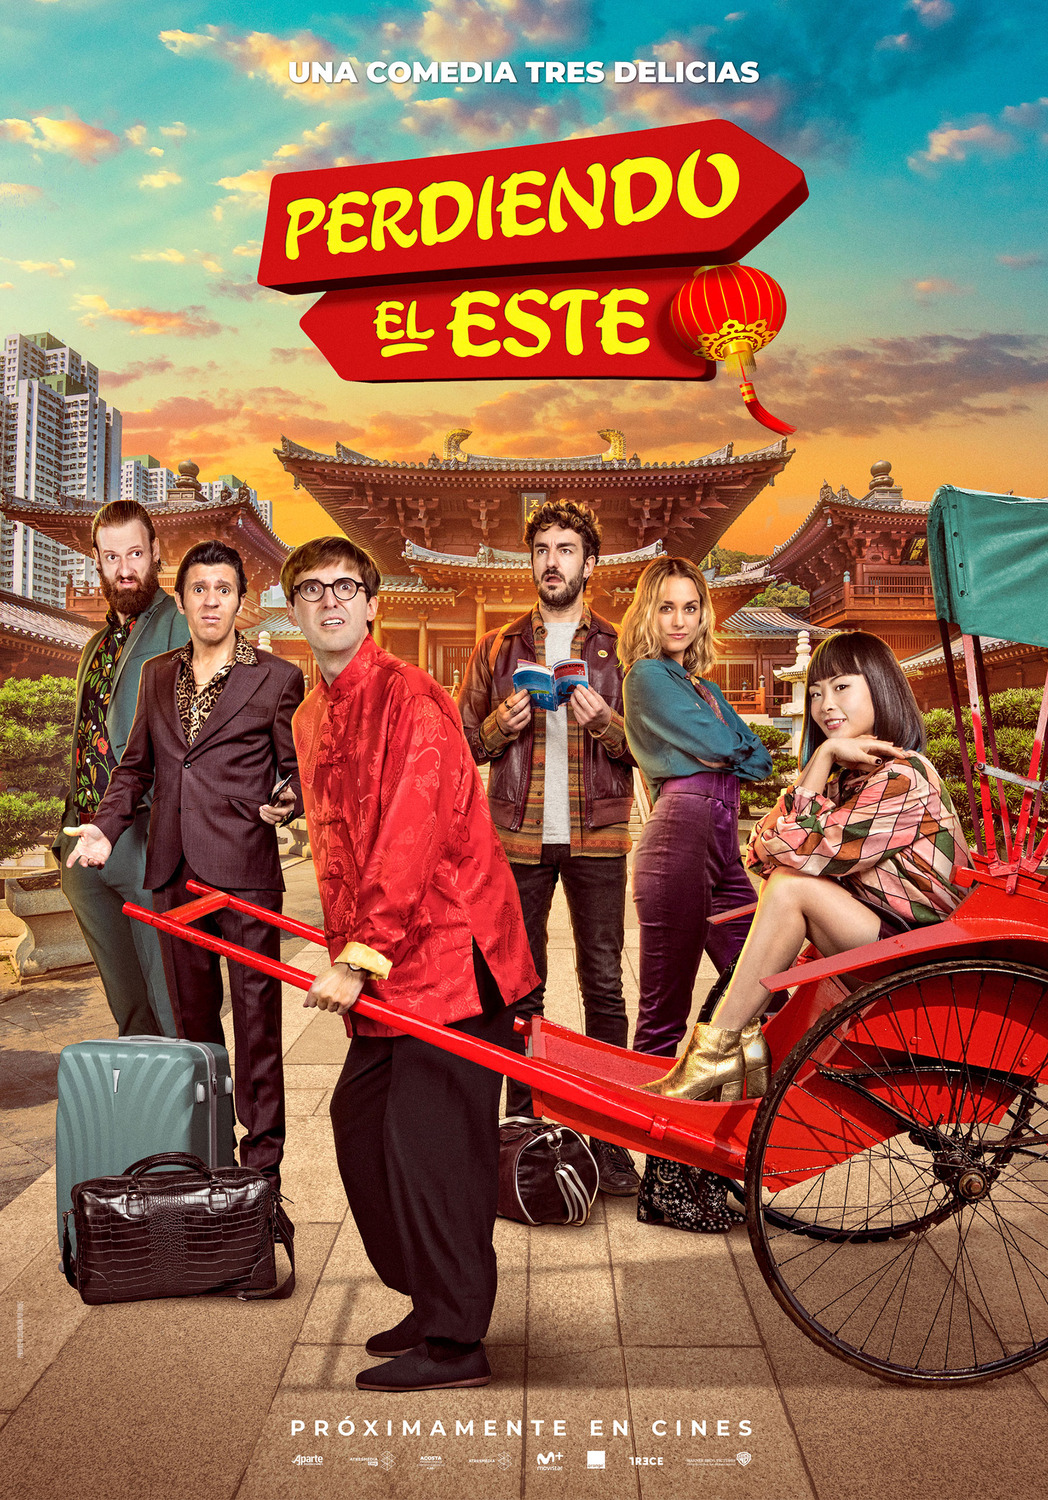 Extra Large Movie Poster Image for Perdiendo el este (#1 of 2)